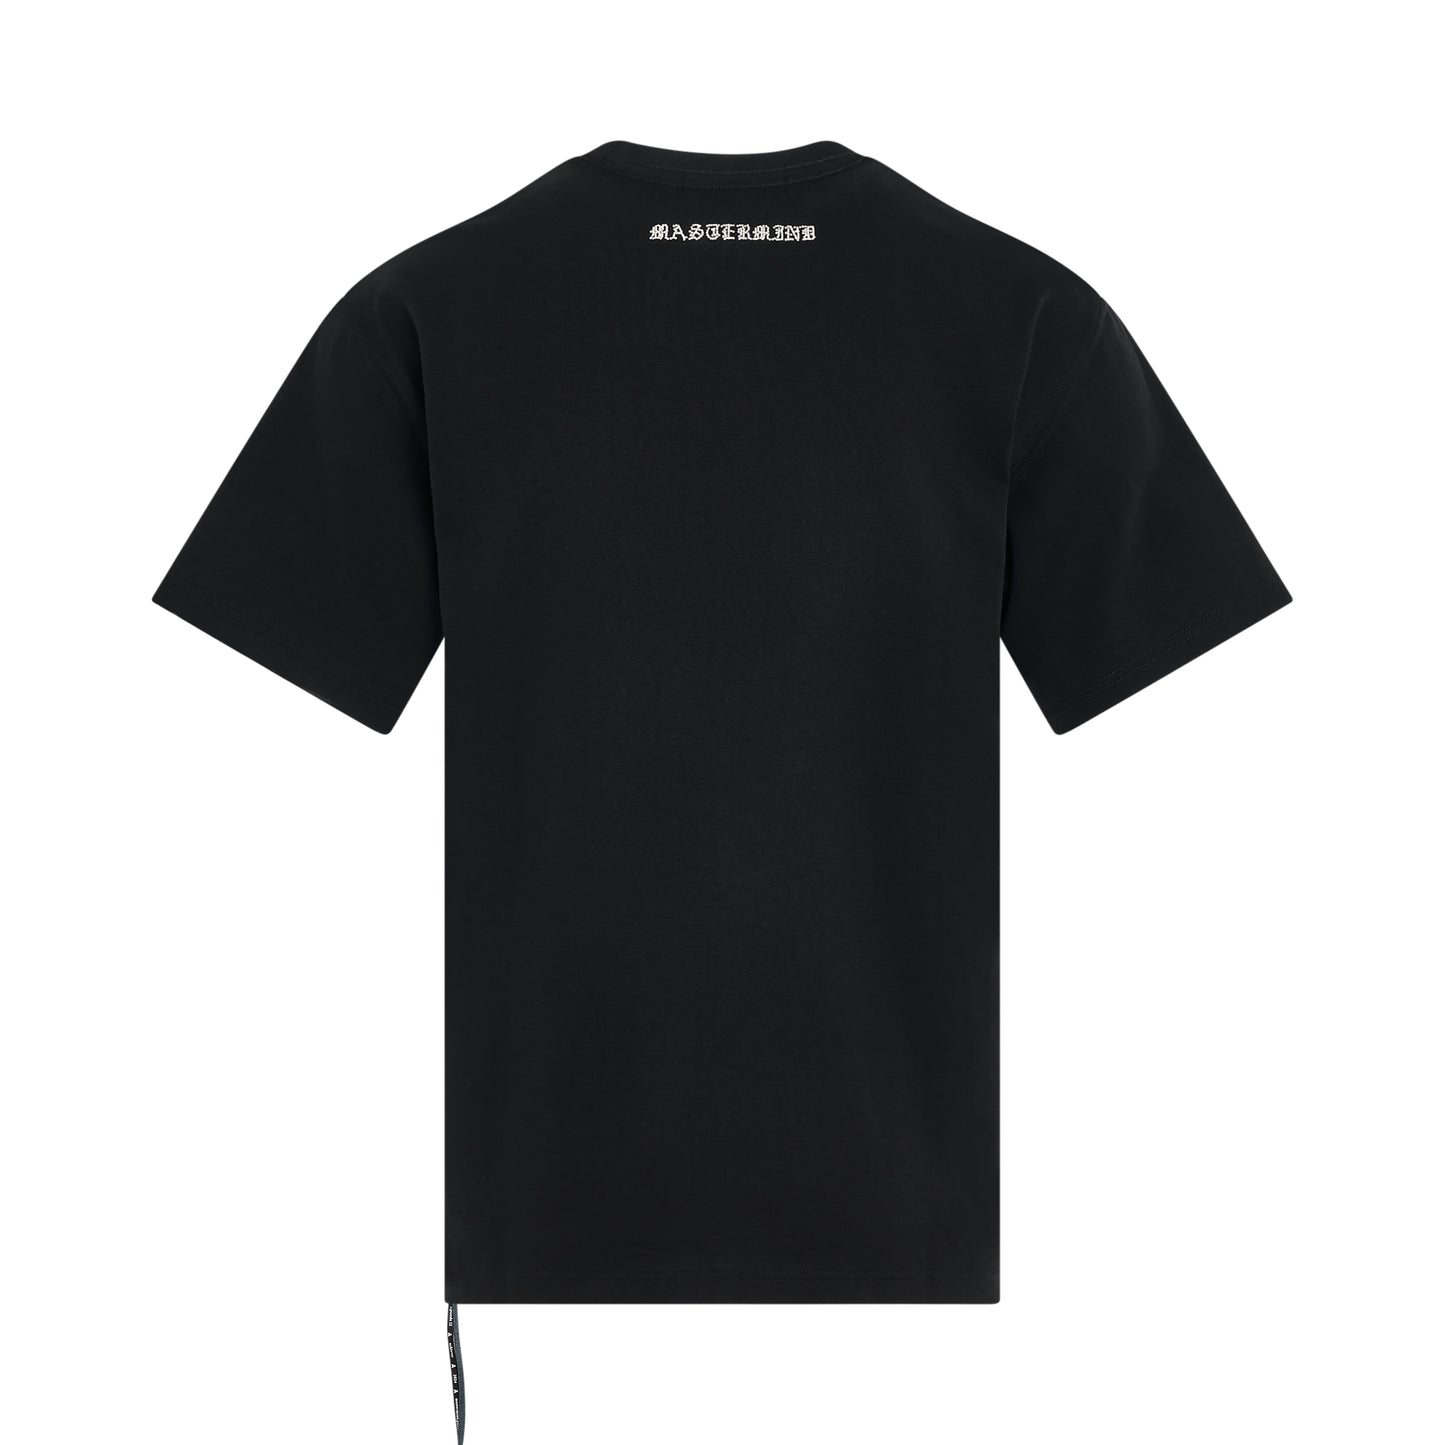 Loopwheel T-Shirt in Black